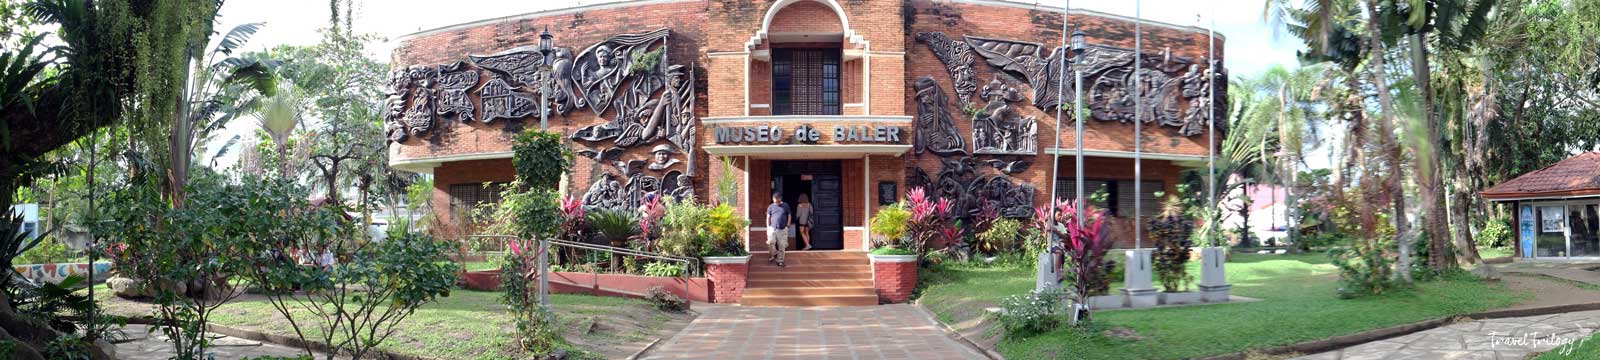 baler museum